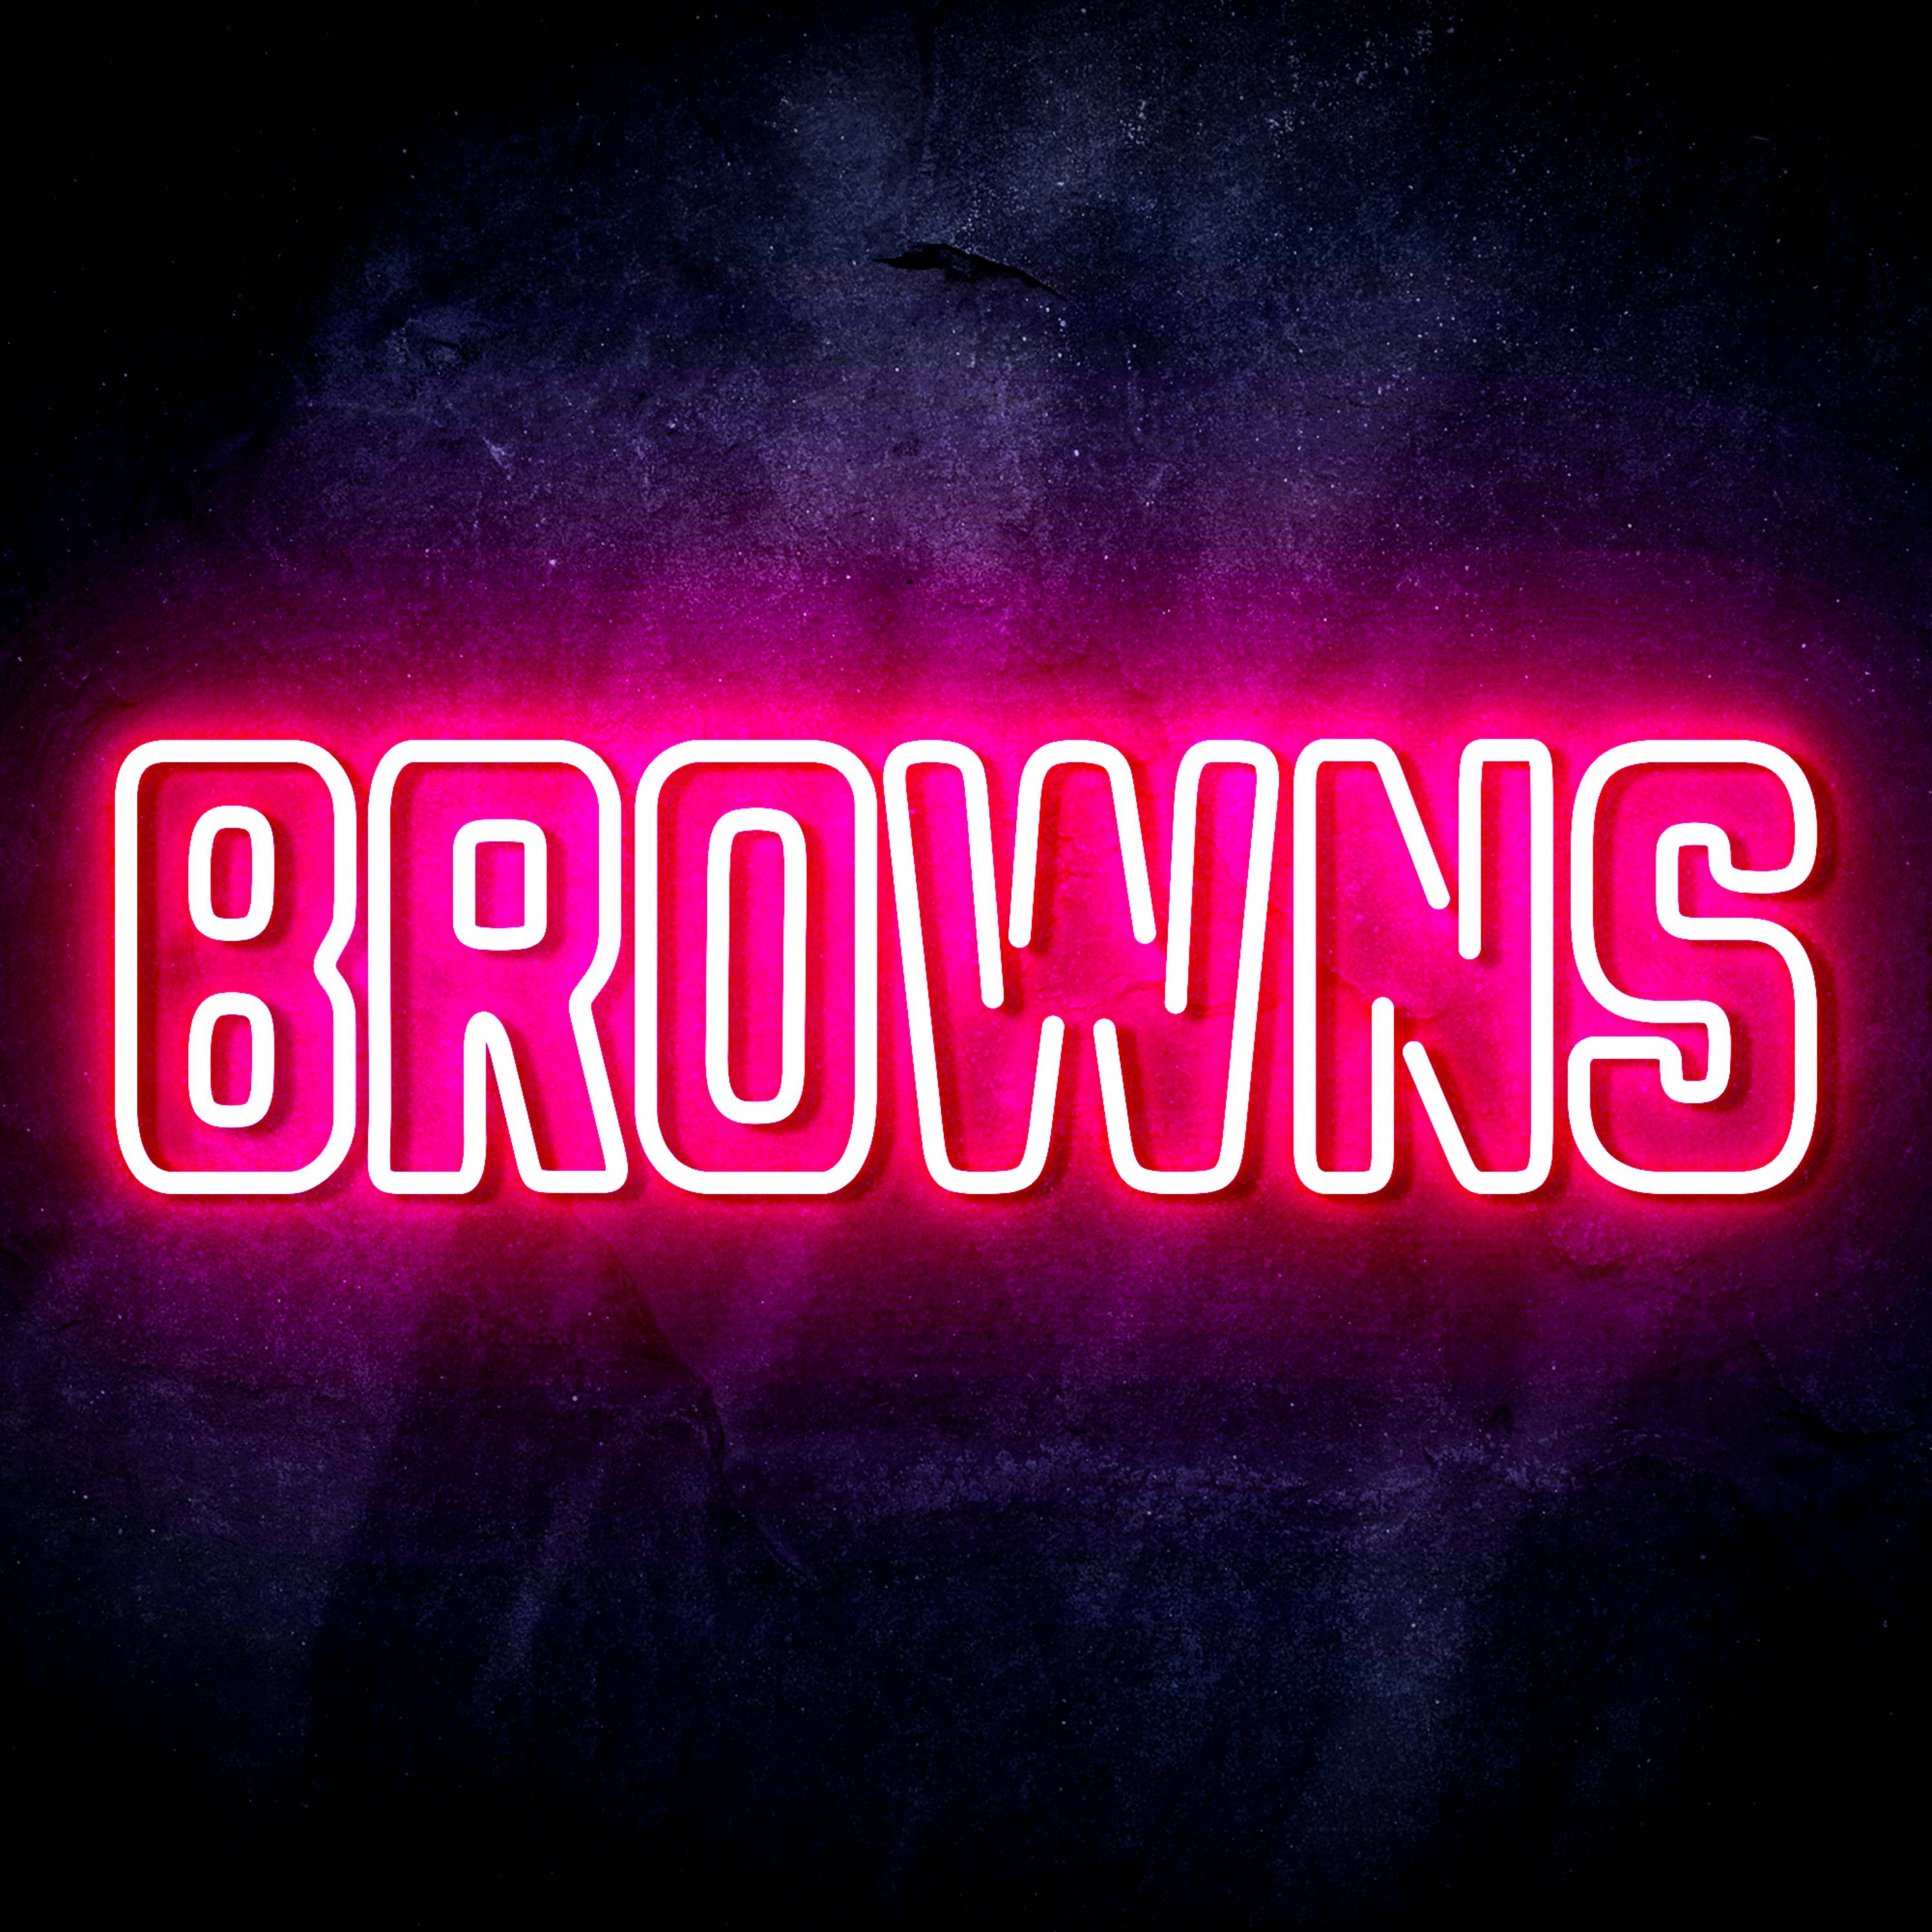 NFL BROWNS LED Neon Sign